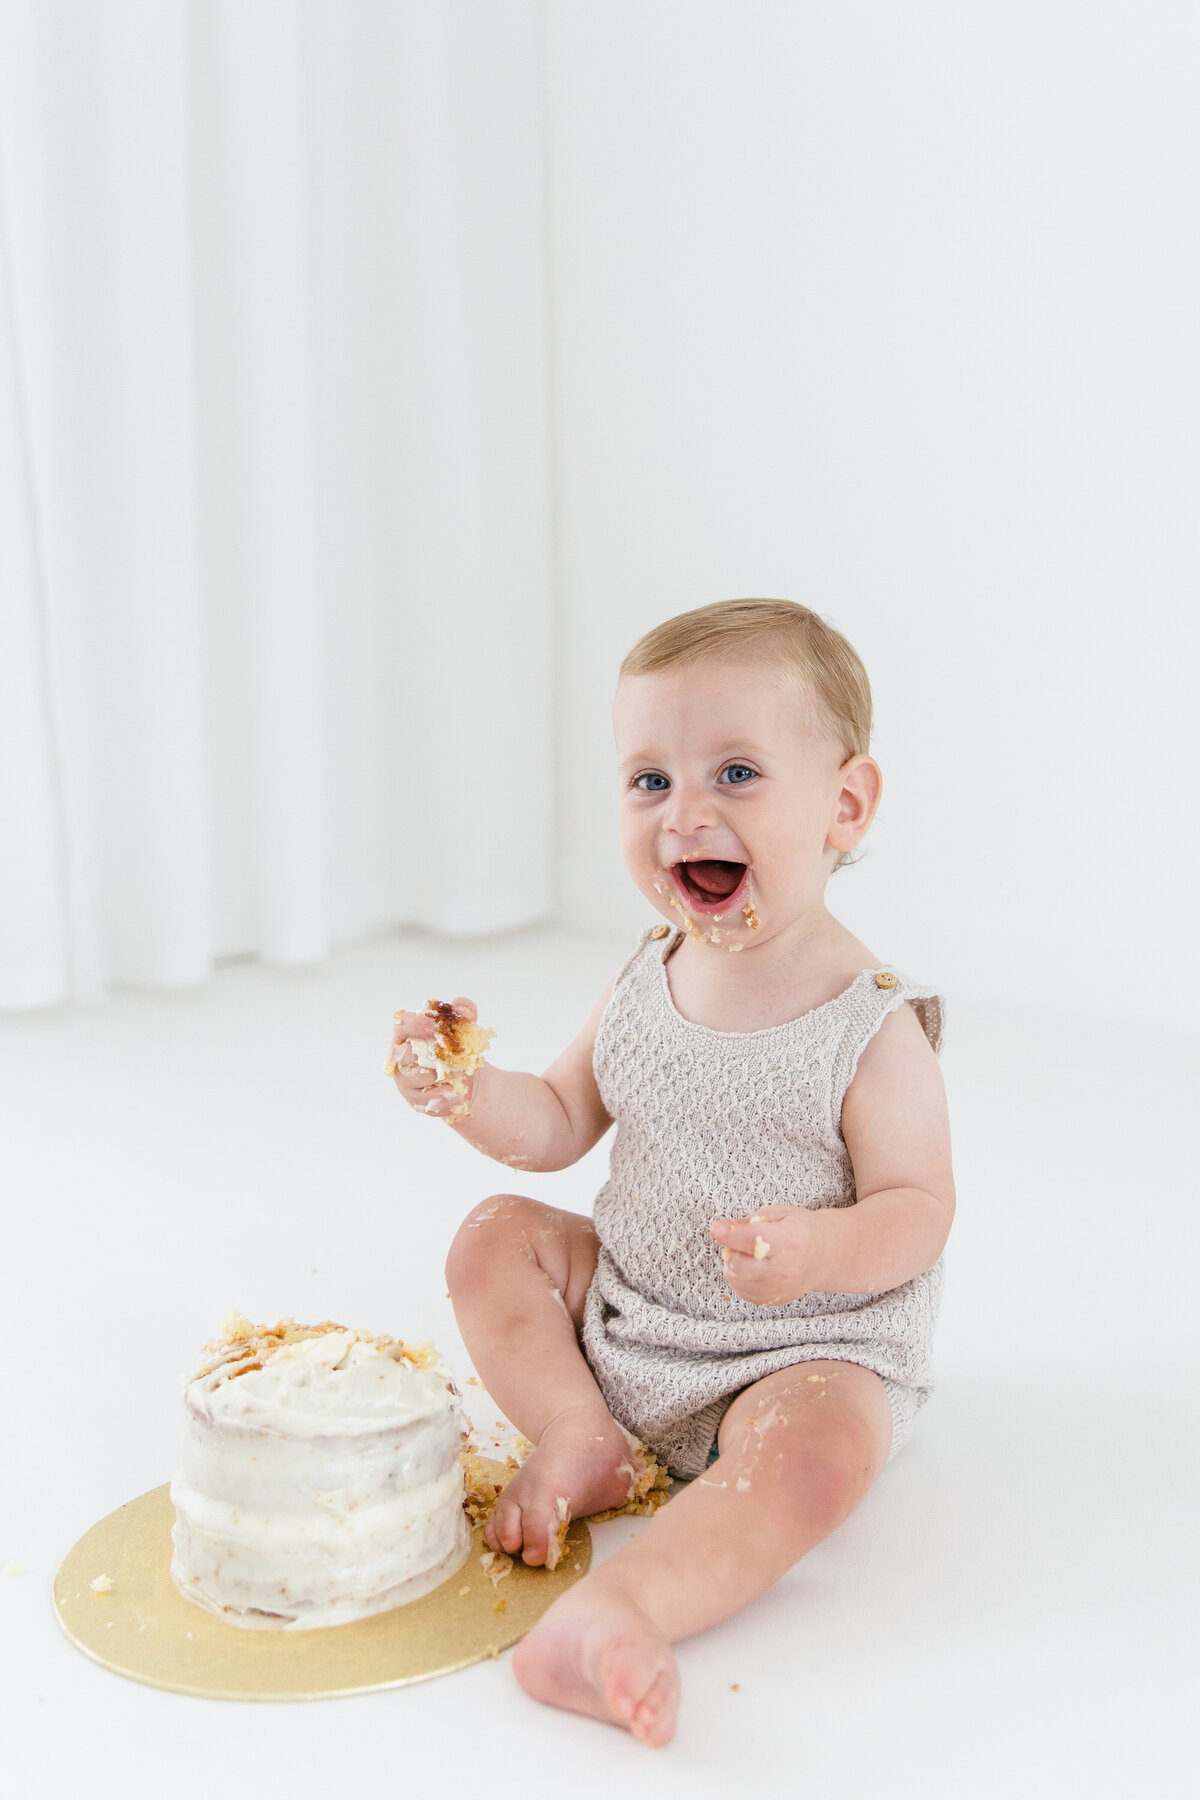 one year old enjoying cake